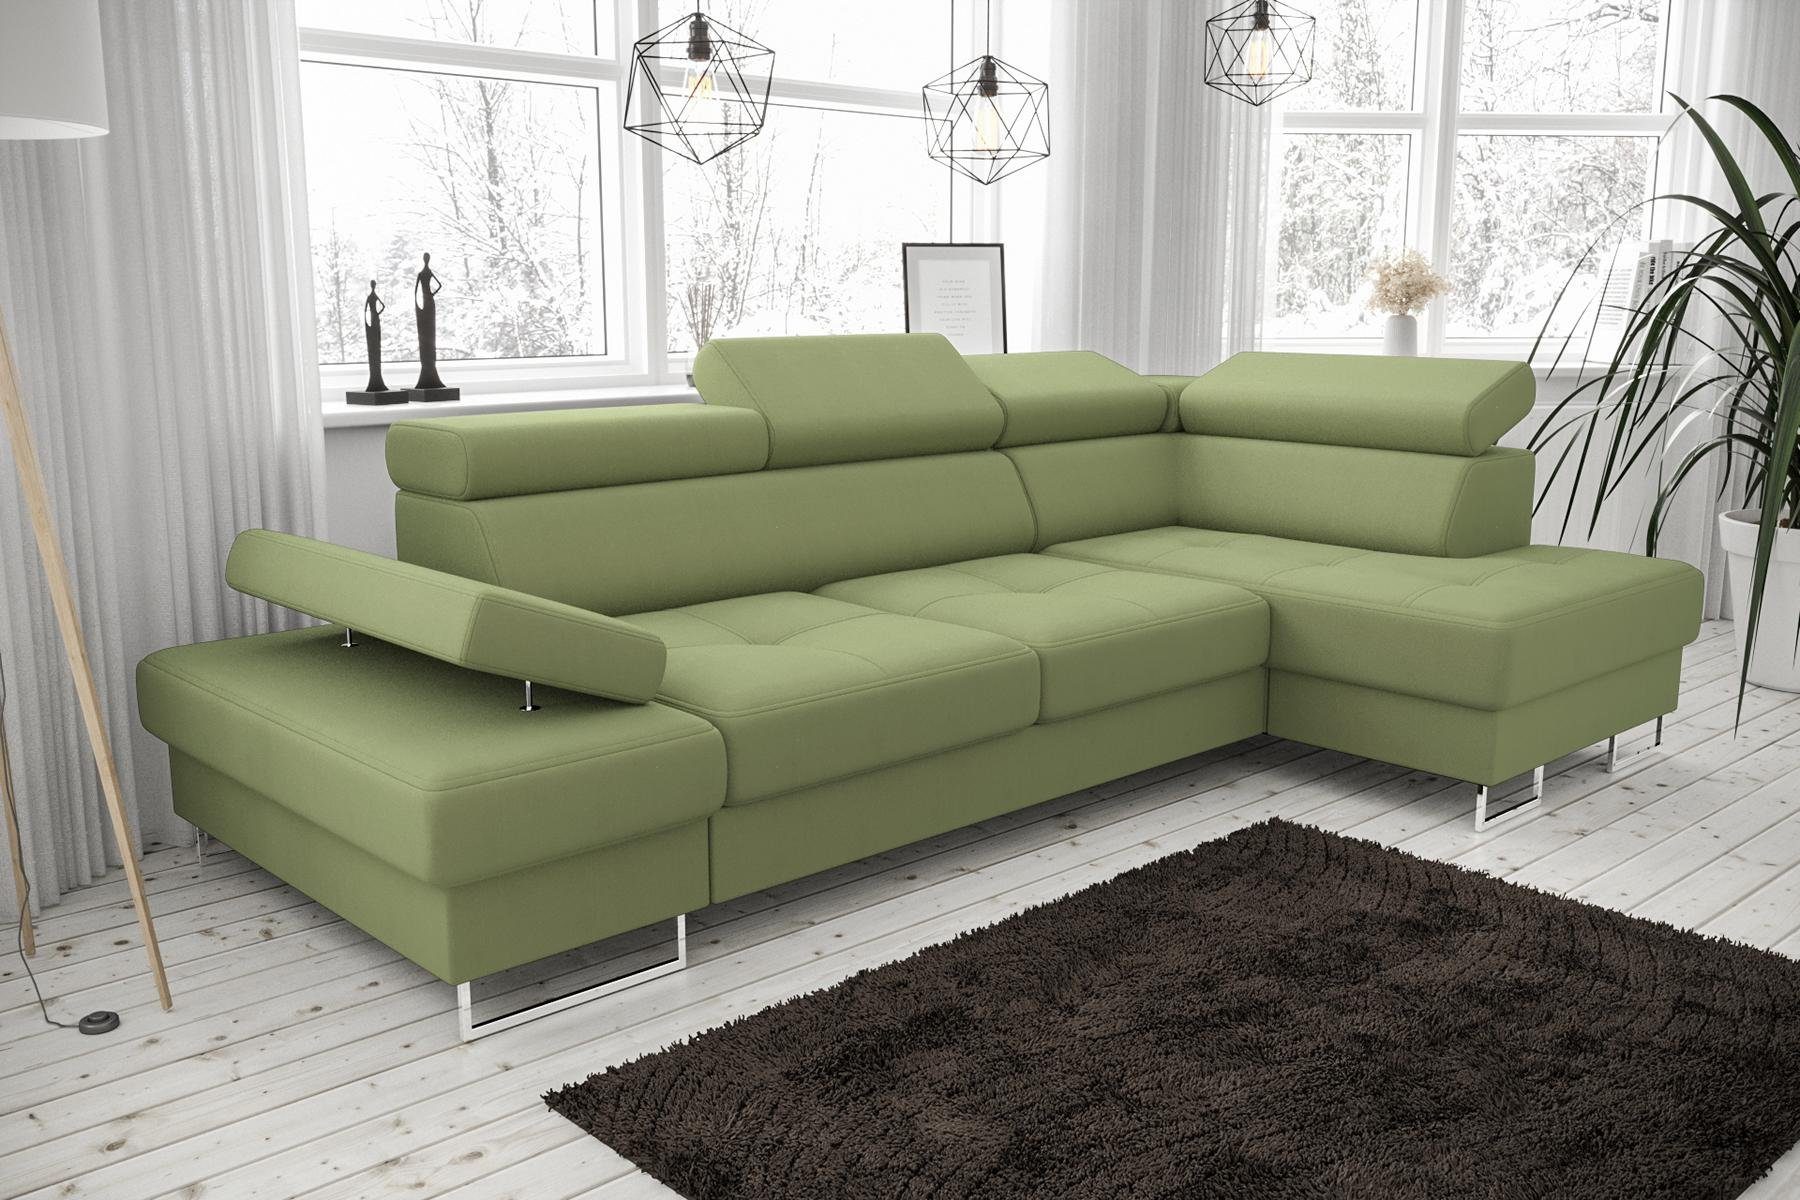 JVmoebel Ecksofa Sofas L Form Sofa Couch Polster Wohnlandschaft Design Ecksofa, Made in Europe Grün